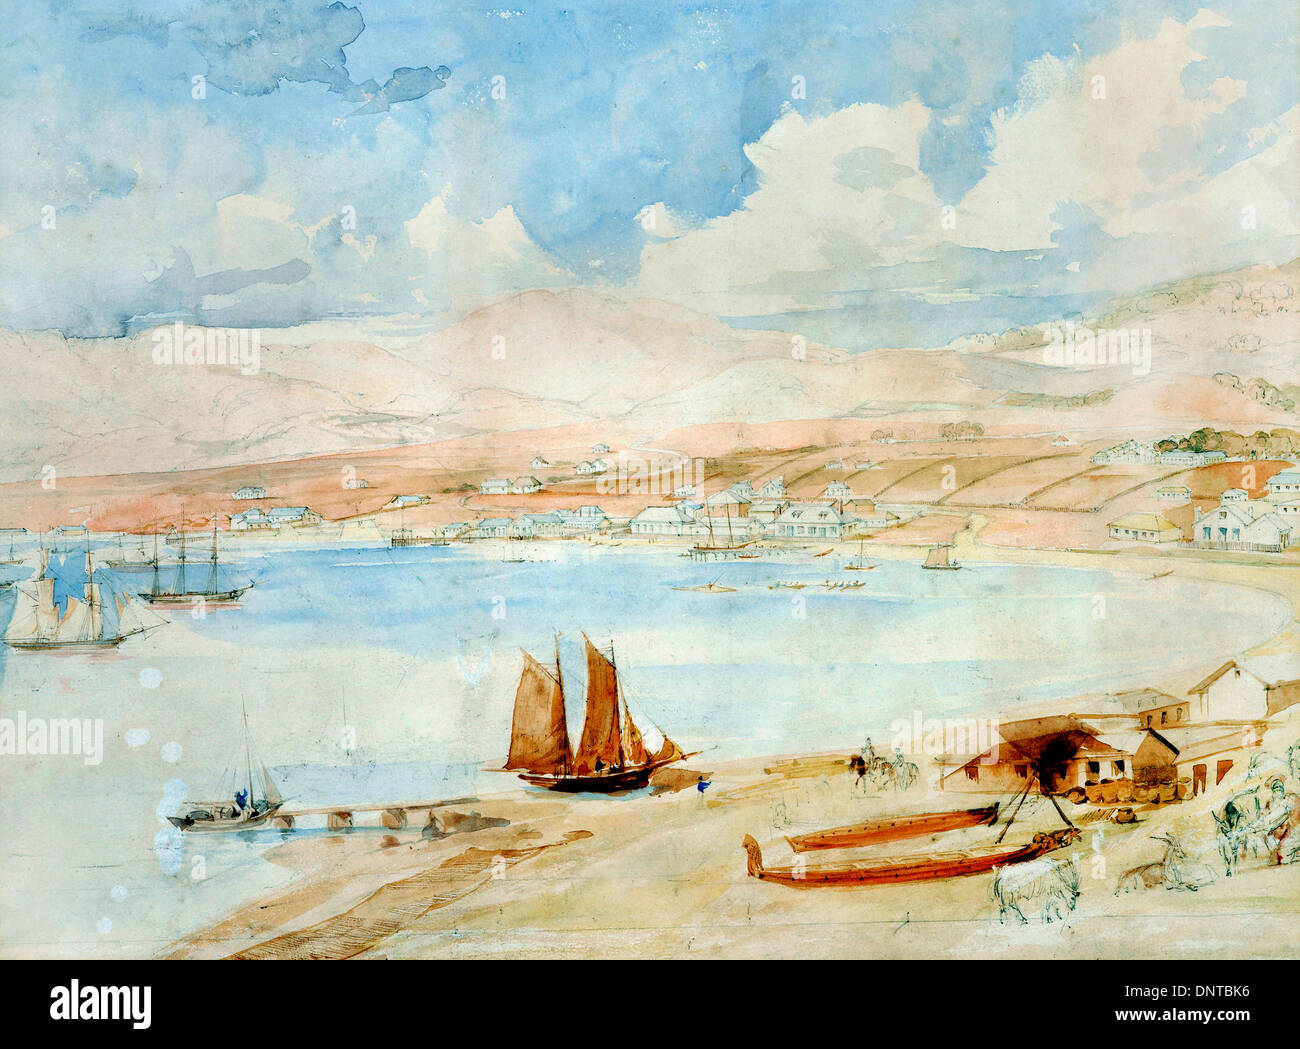 Charles Heaphy, Wellington Harbour, N.Z. 1841 Watercolor. Museum of New Zealand Te Papa Tongarewa. Stock Photo